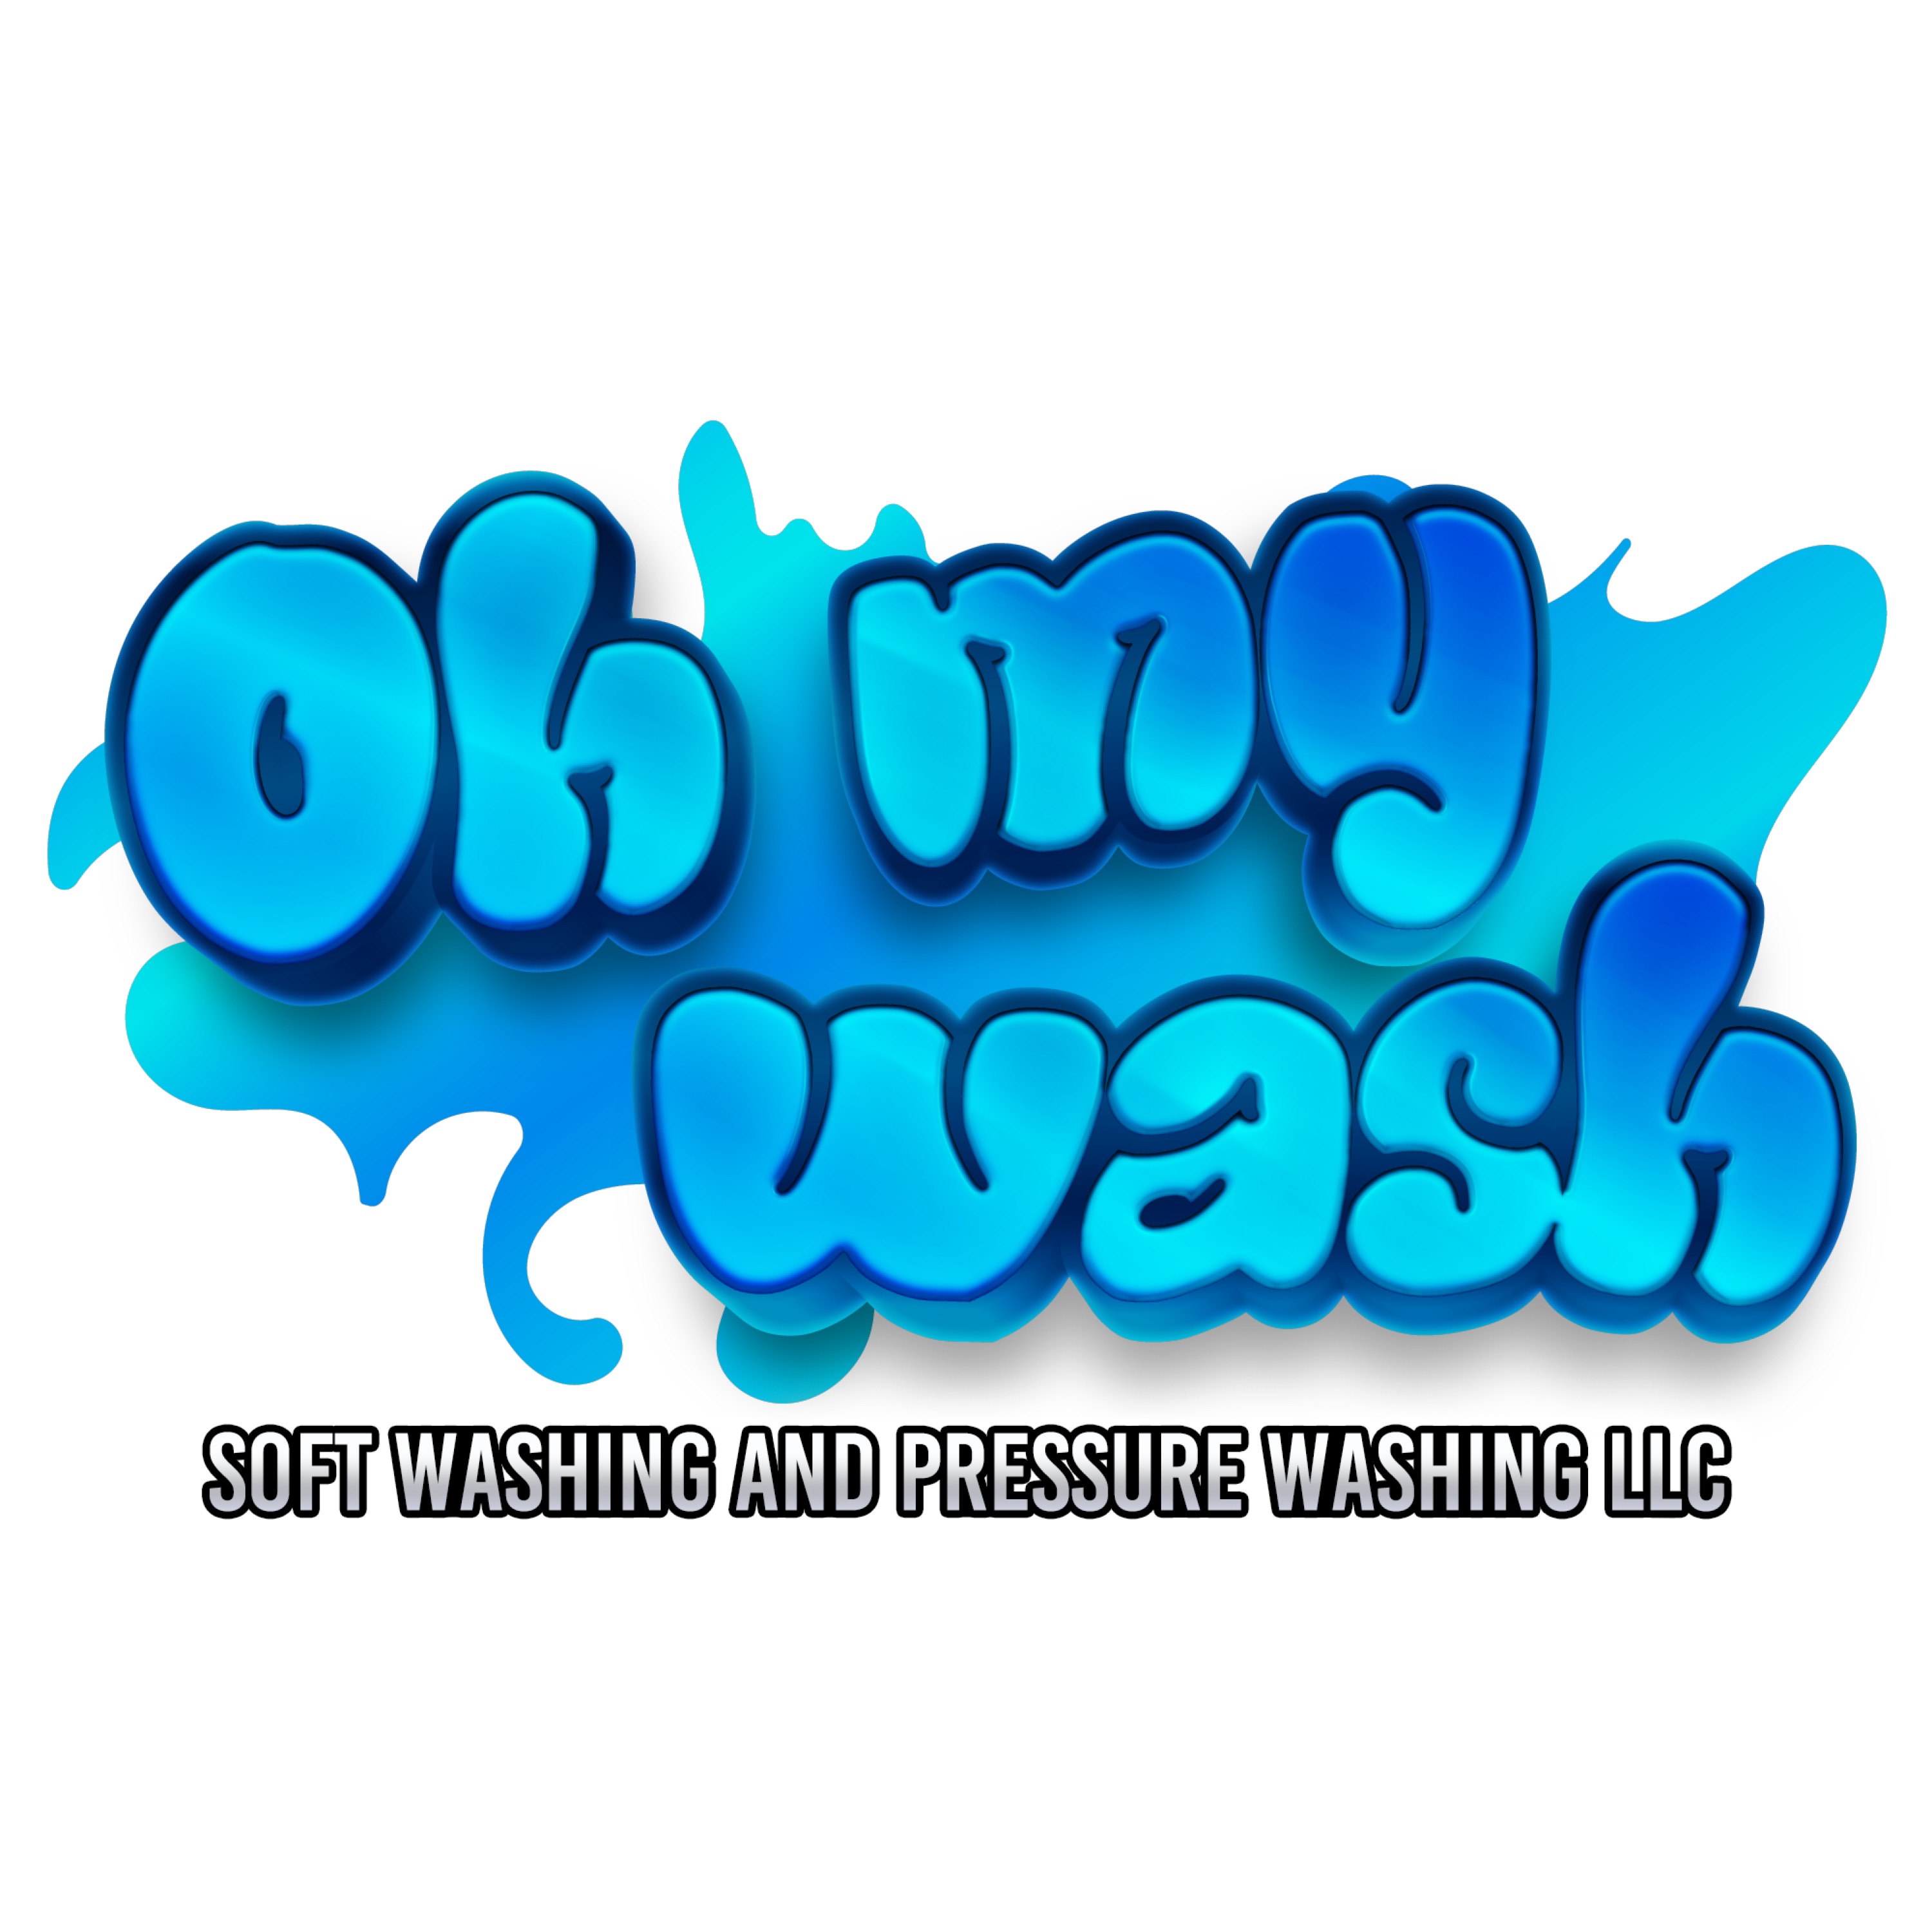 Oh My Wash Soft Washing and Pressure Washing, LLC Logo